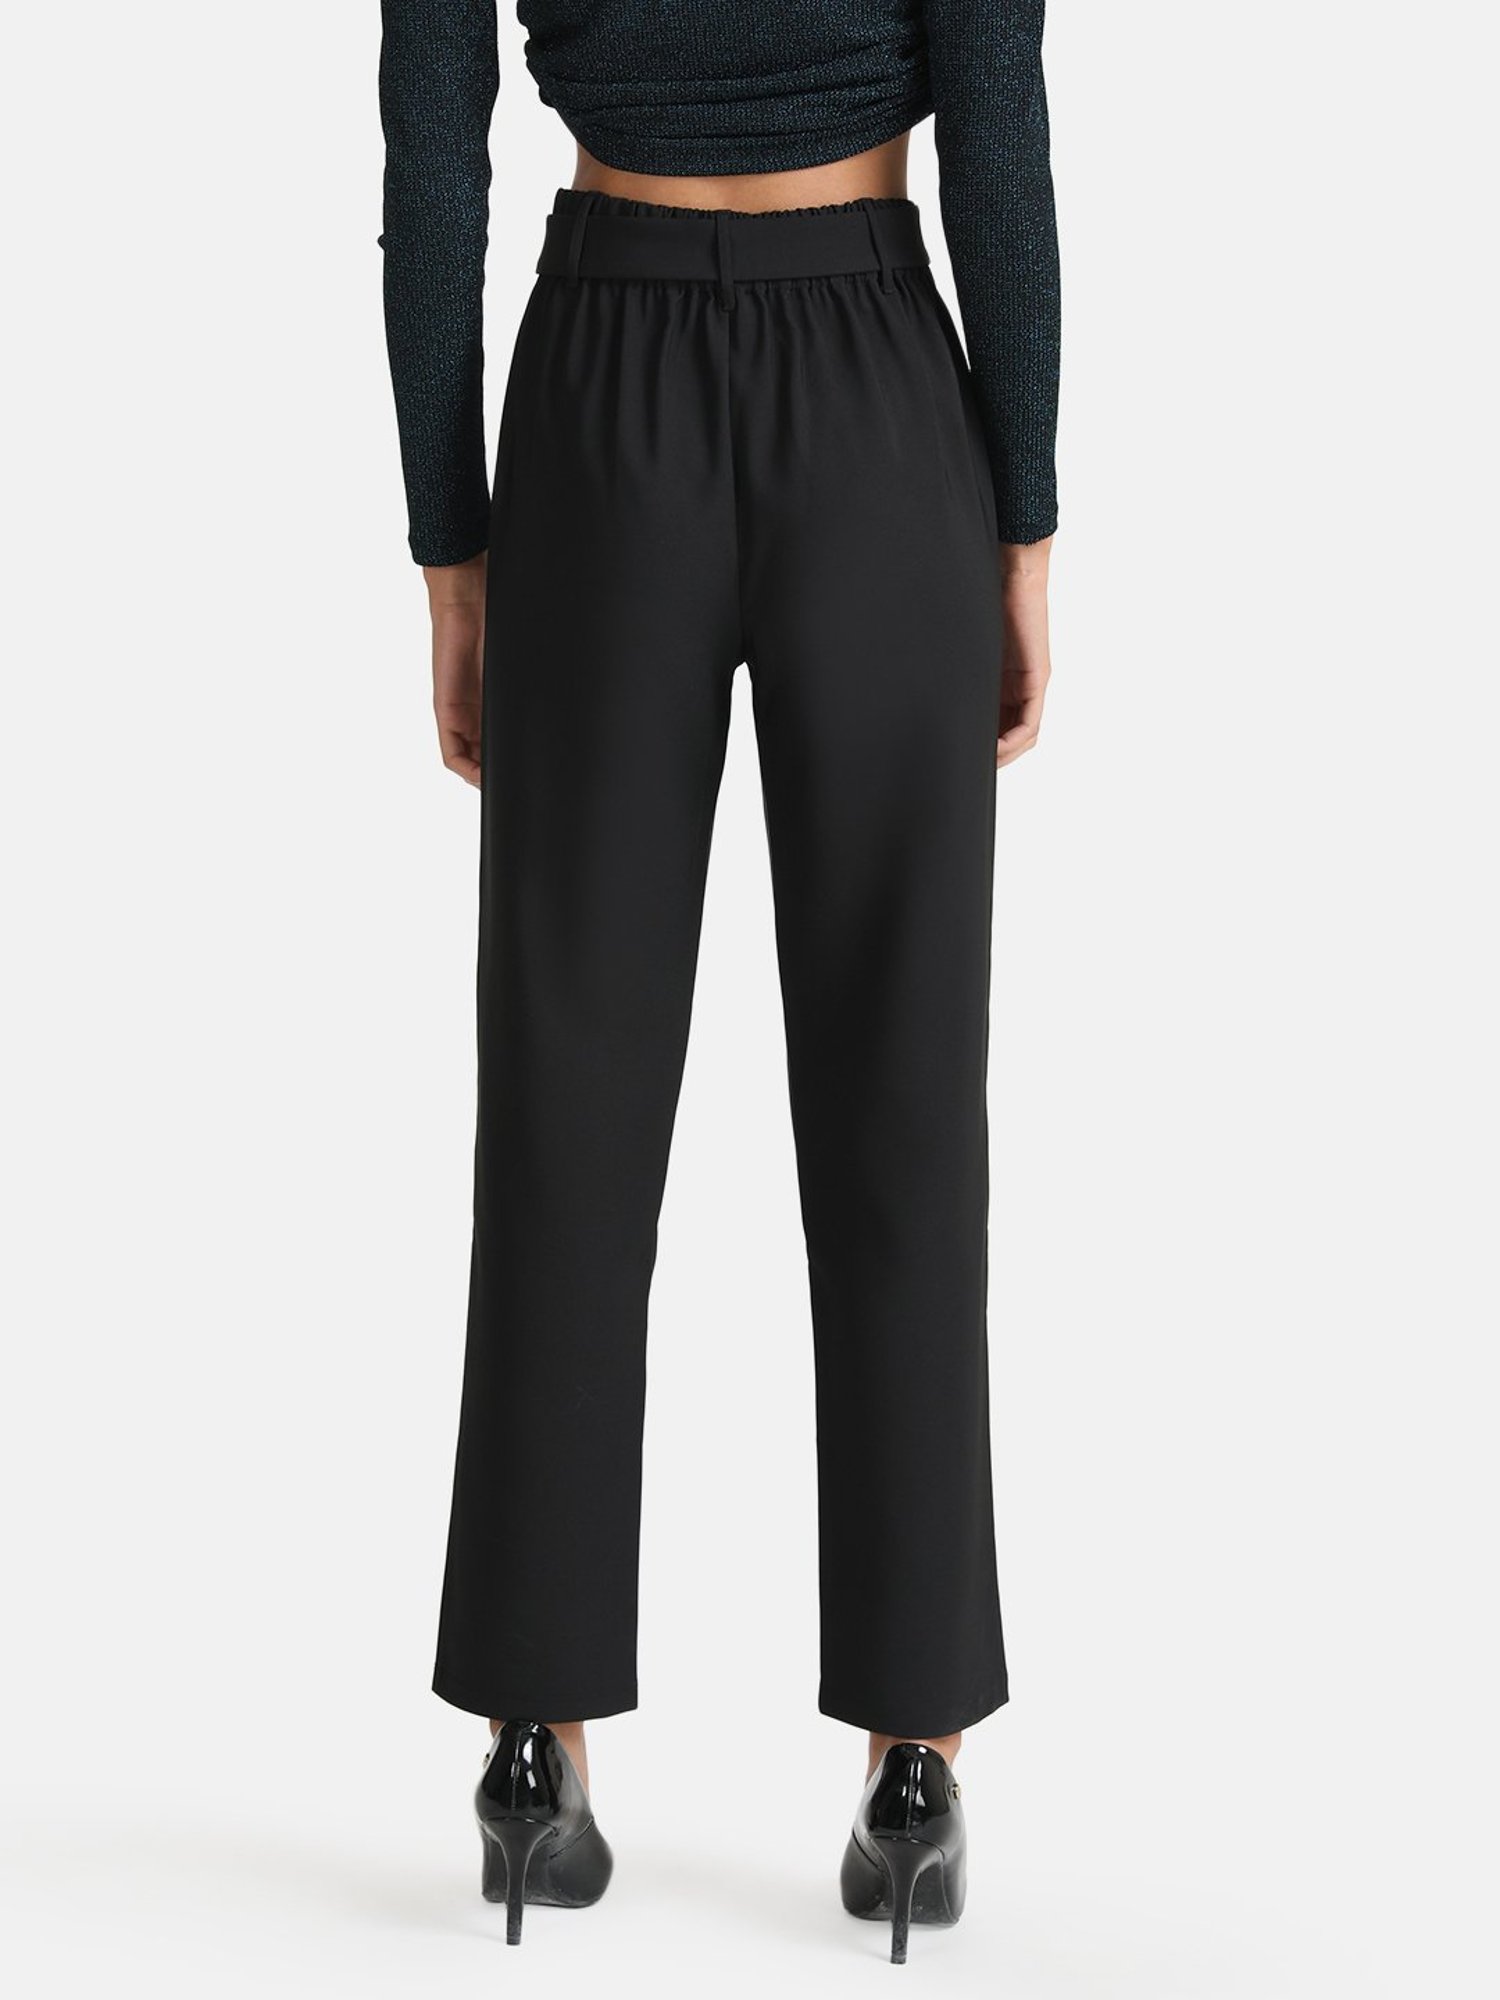 Buy Kazo Women's Regular Casual Pants (124641DRKDMBL26_Black at Amazon.in